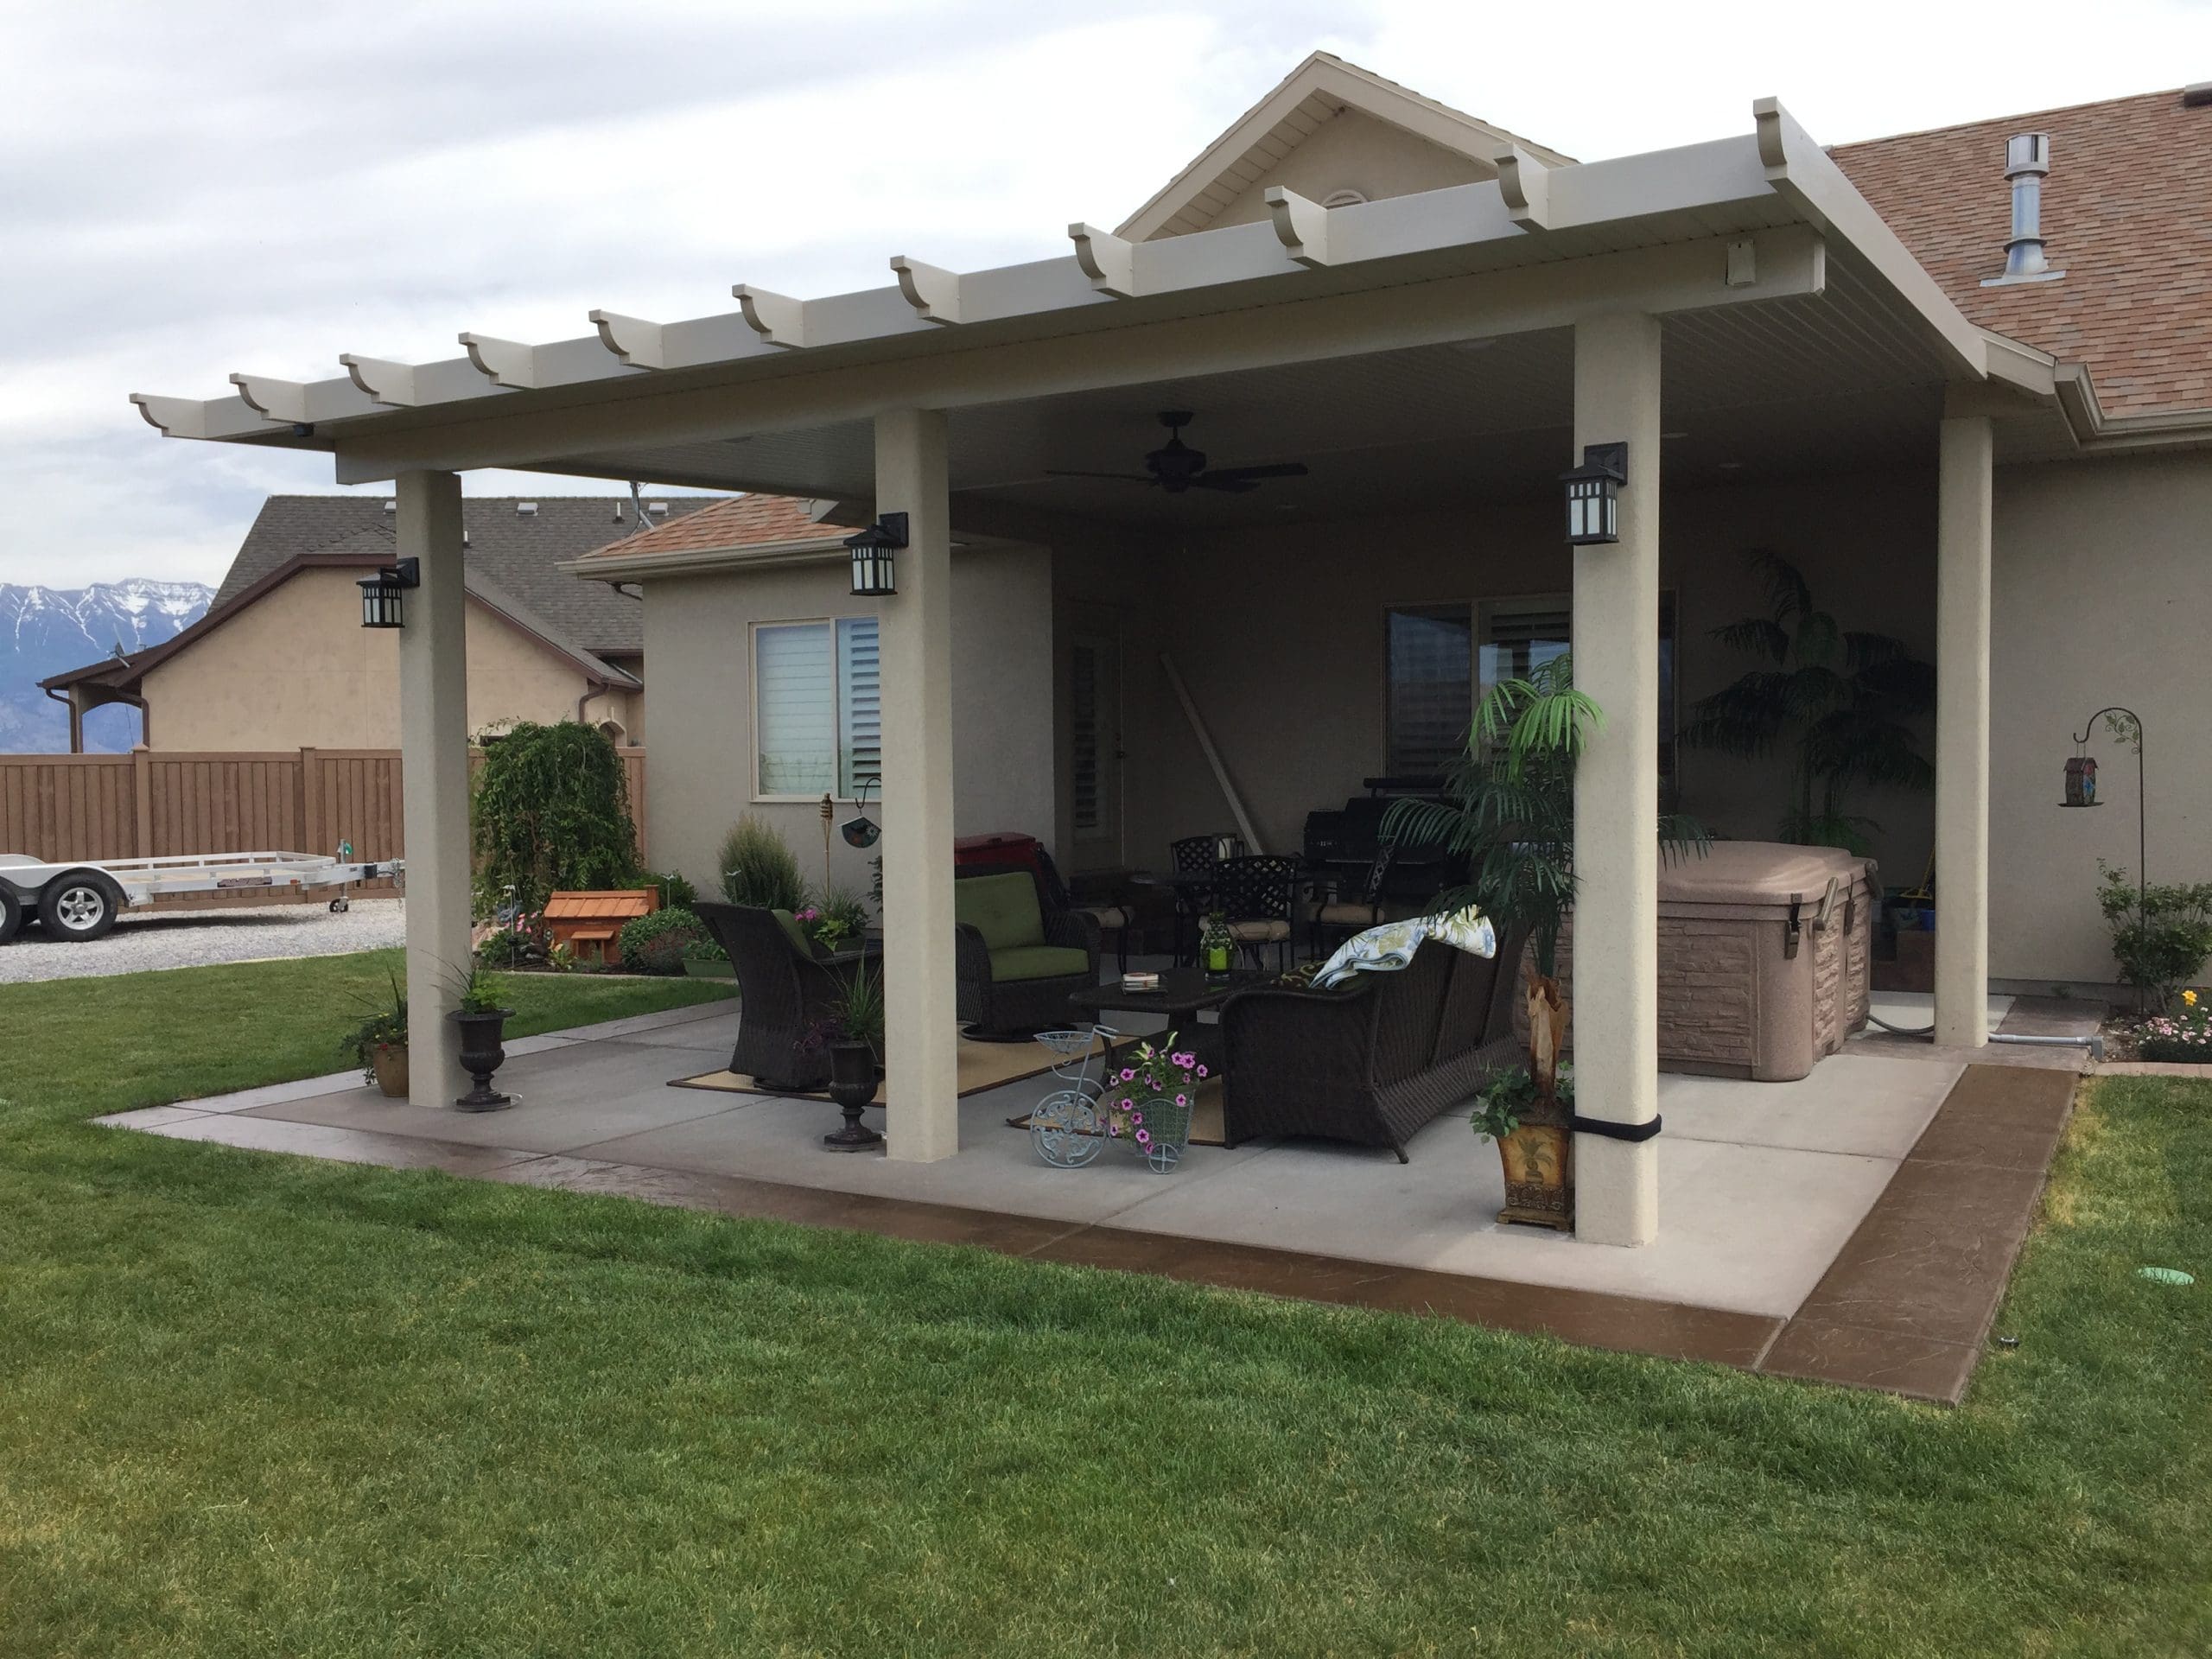 Transform the look and feel of your backyard with custom decks, pergolas and patio covers in Draper, Utah designed by Blackrock Decks.